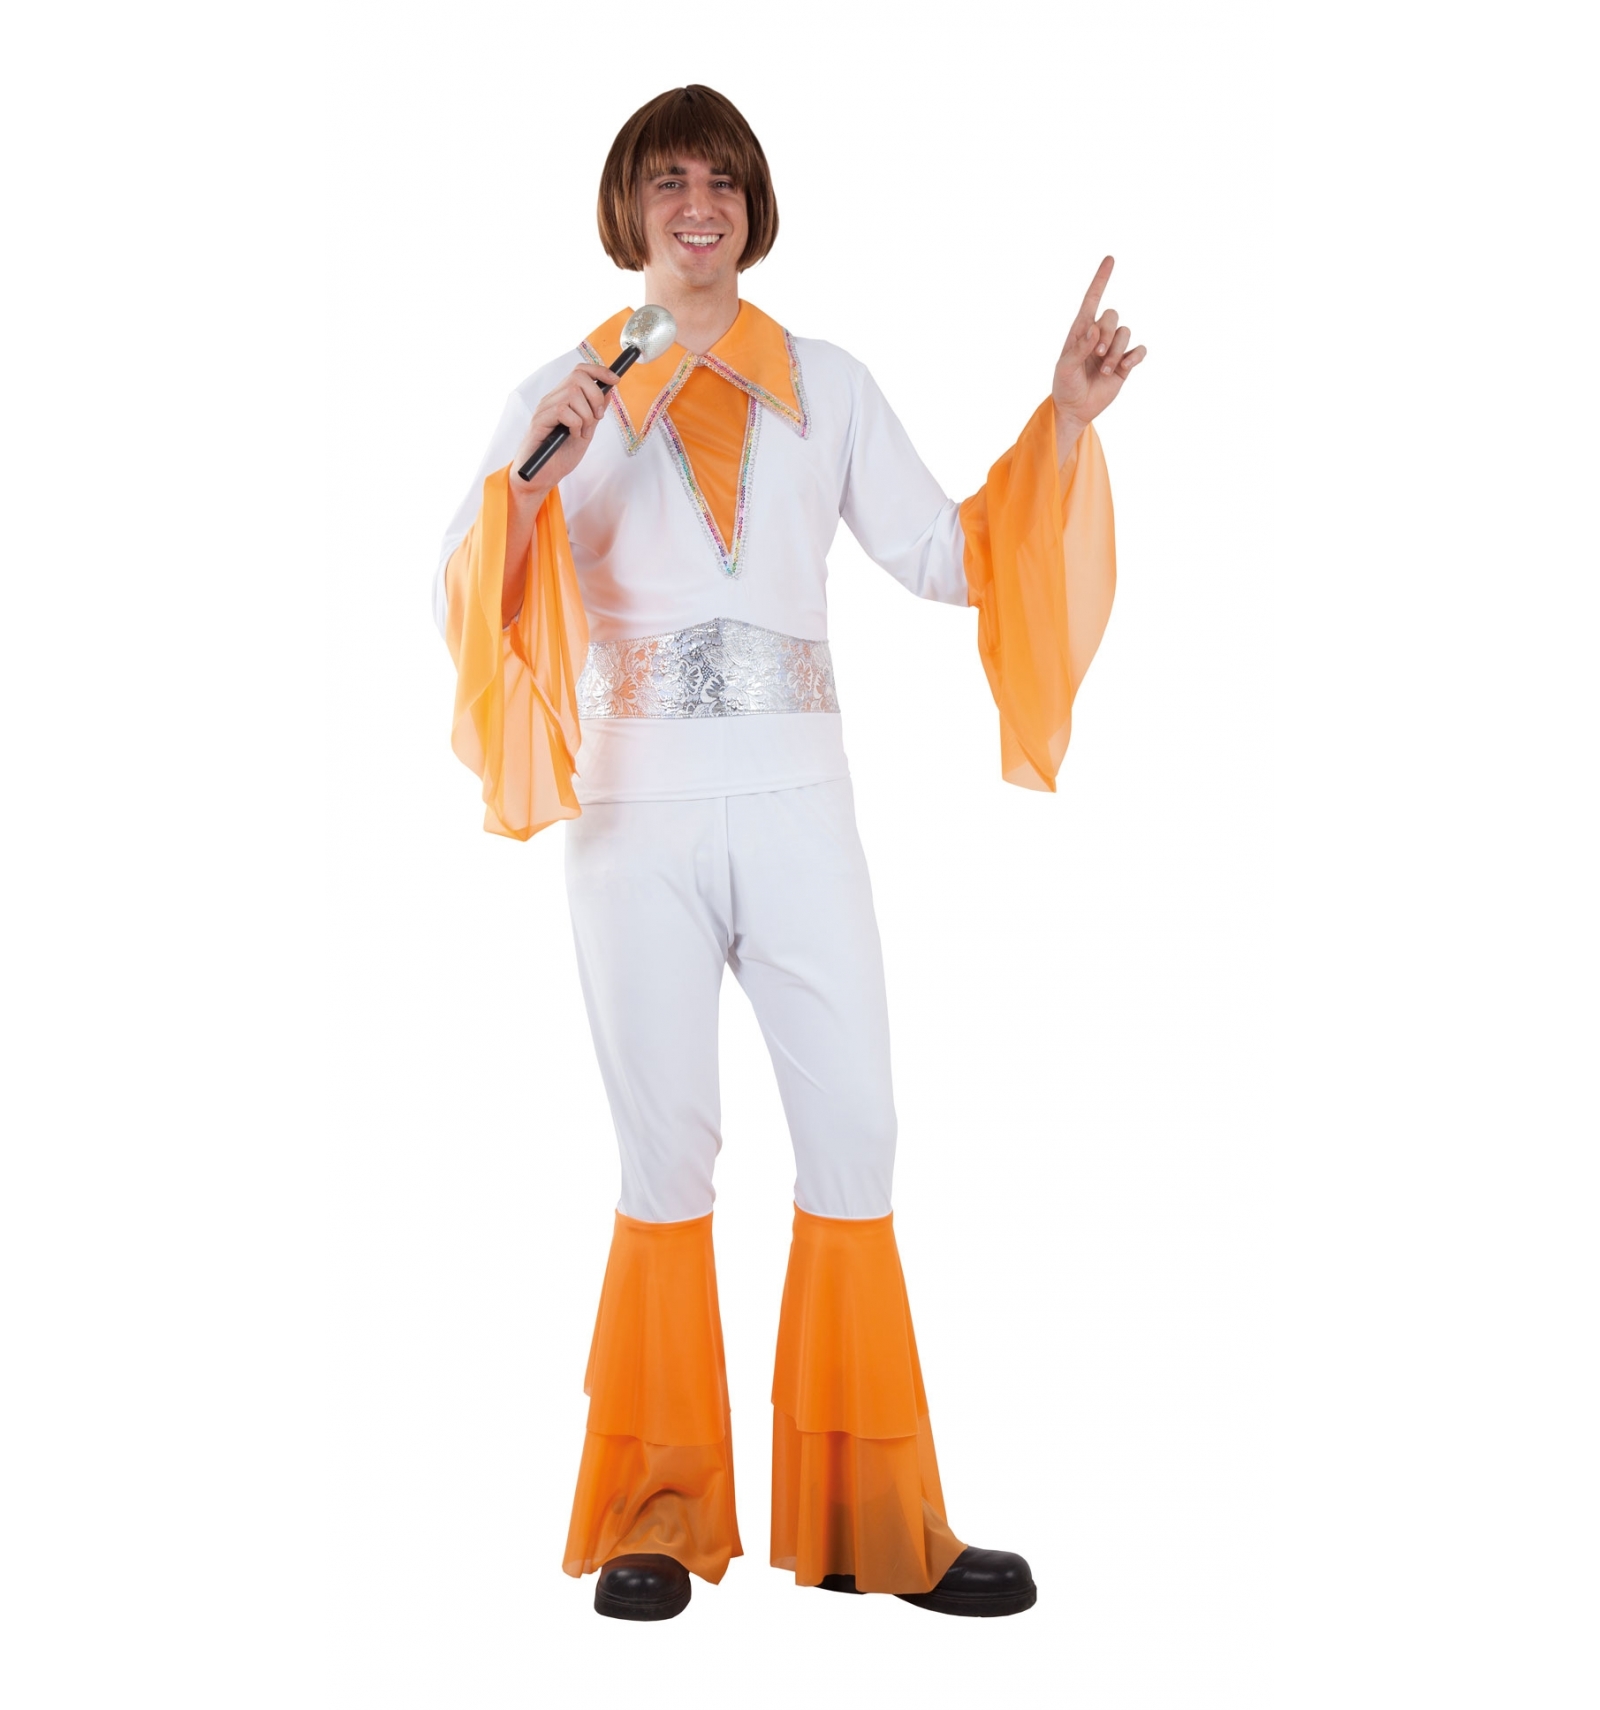 Abba costume, men - Your Online Costume Store